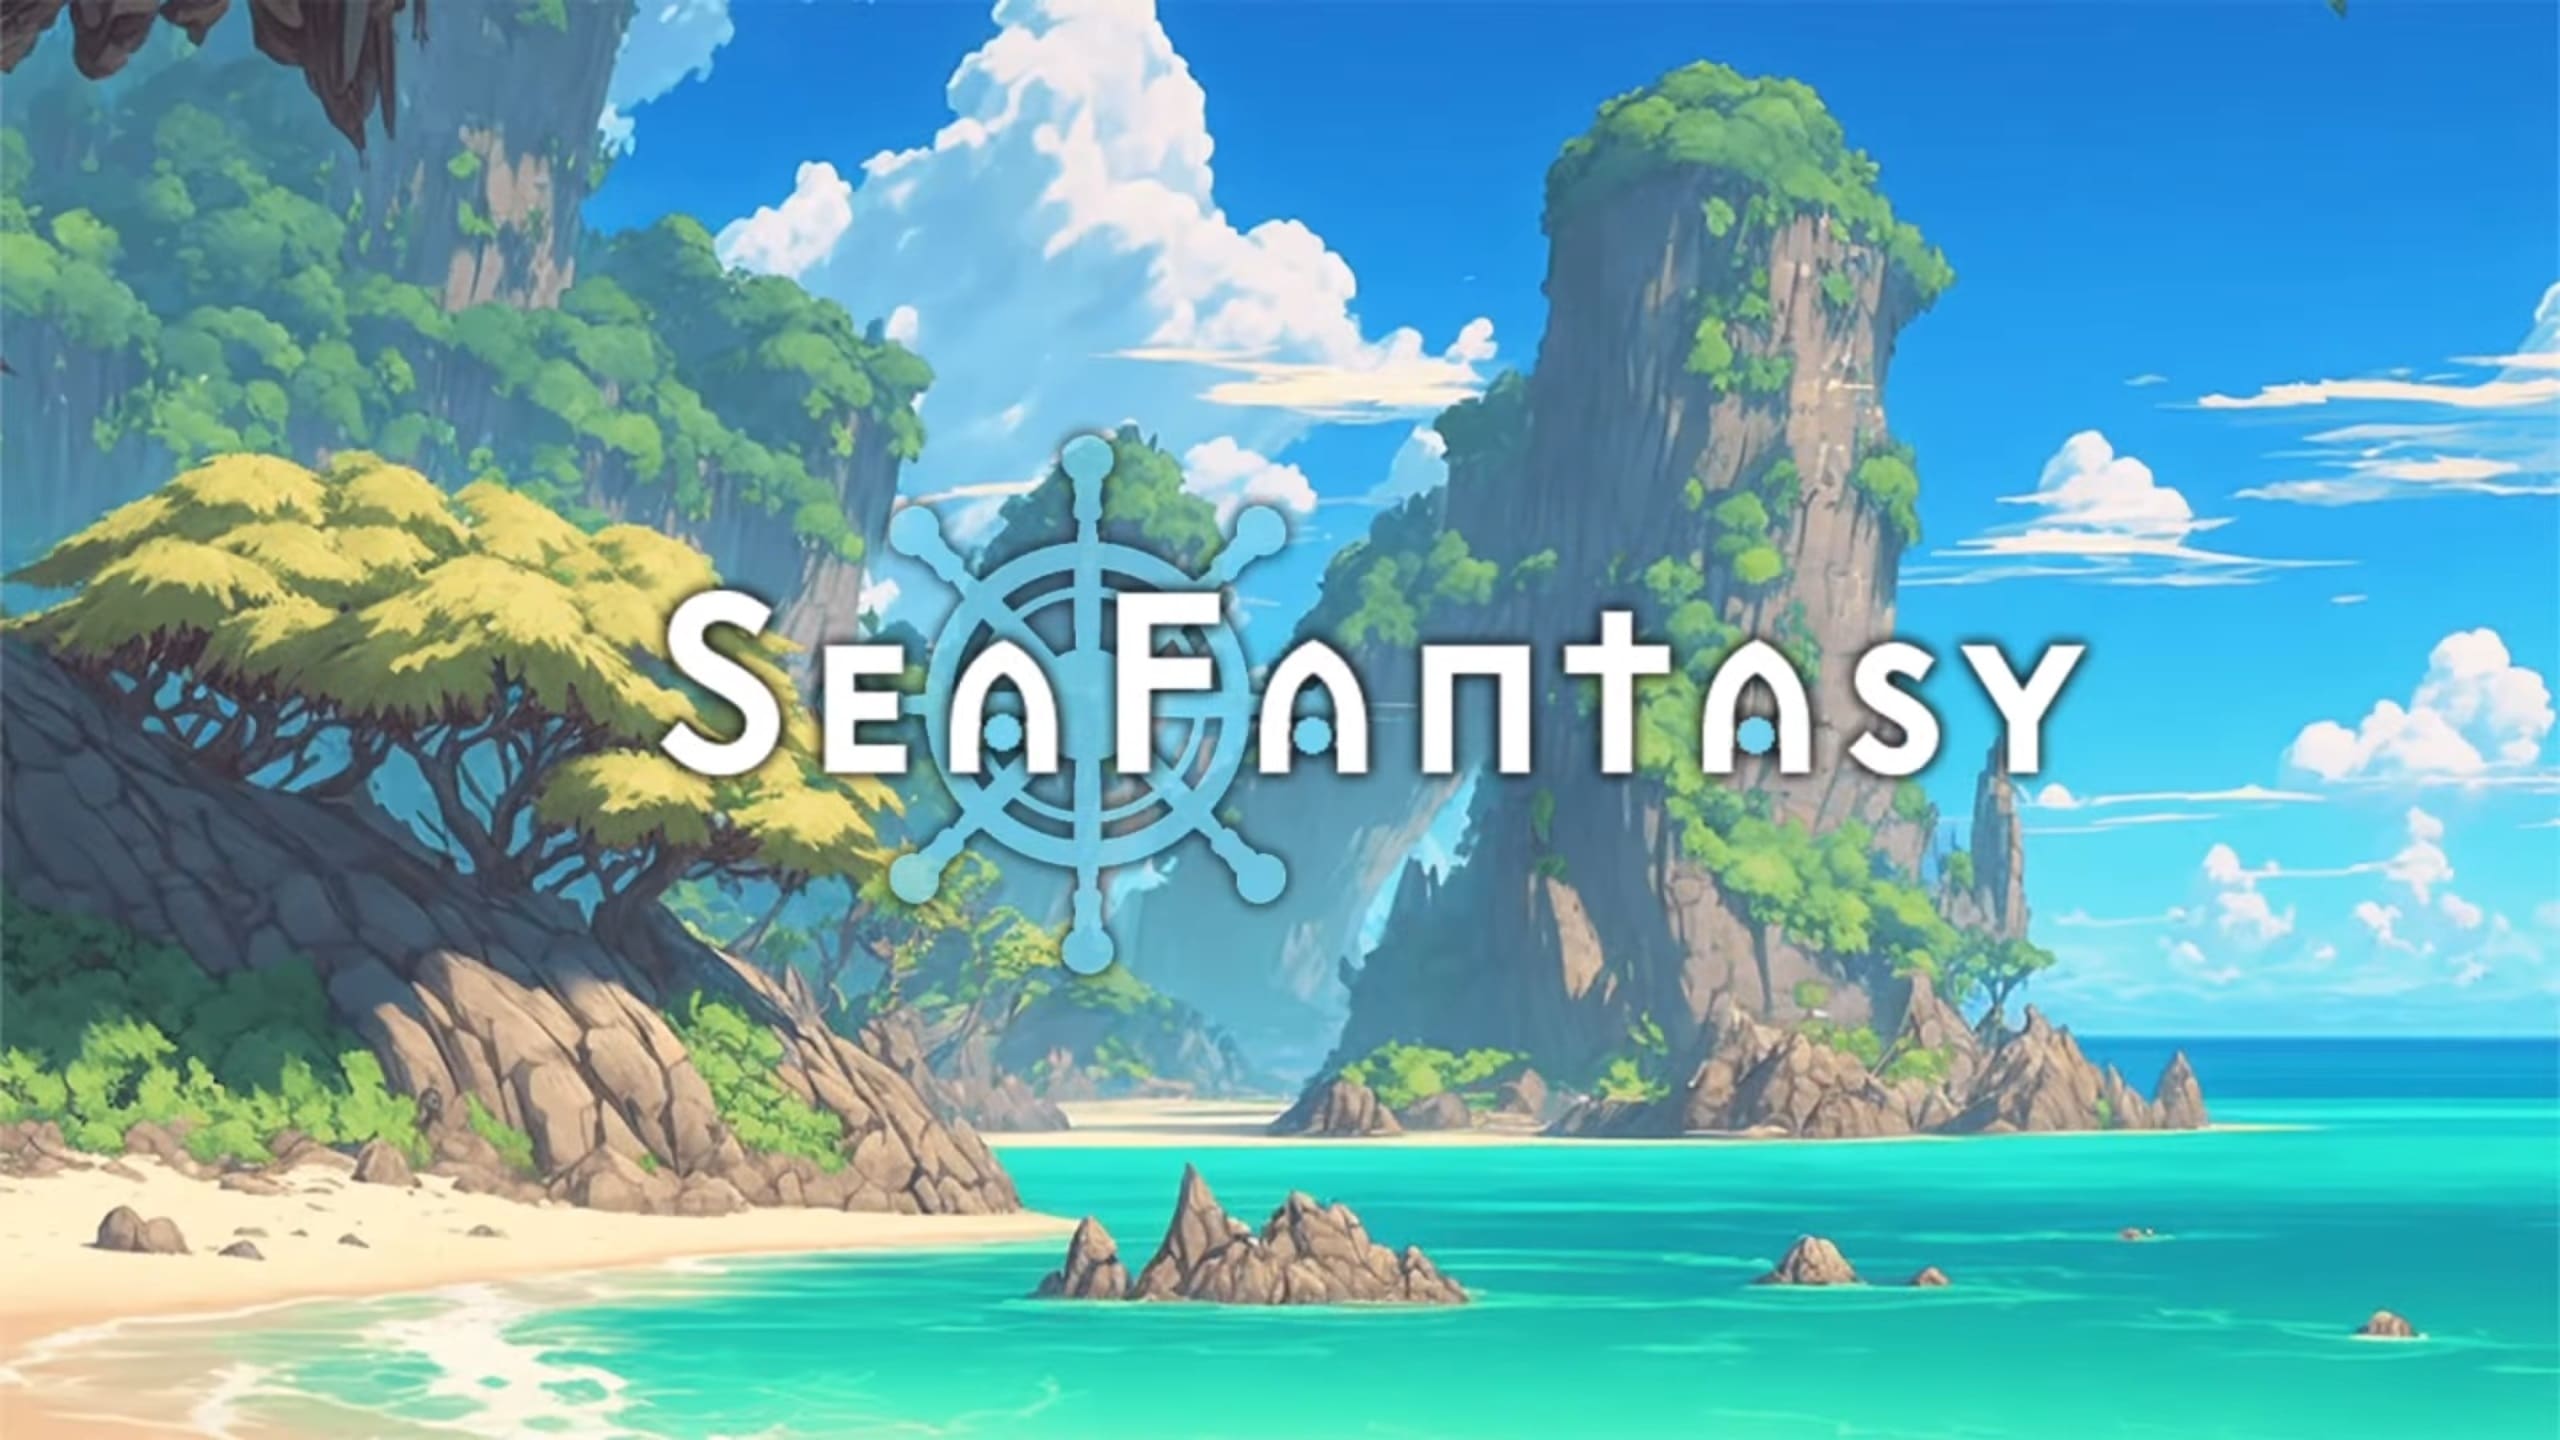 Sea Fantasy RPG Steam